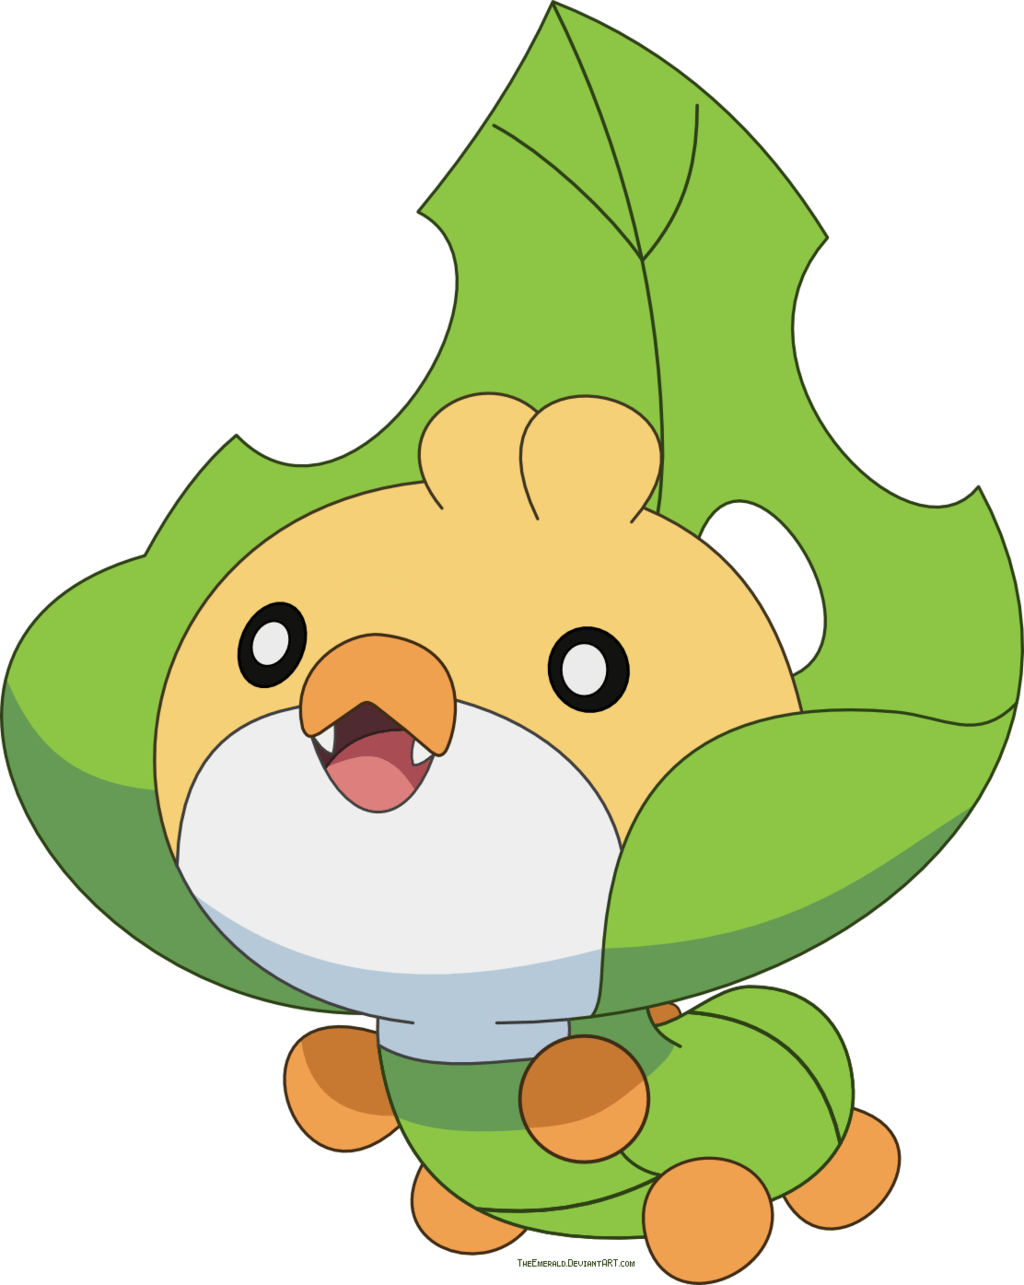 Free Sewaddle Pokemon vector by Emerald